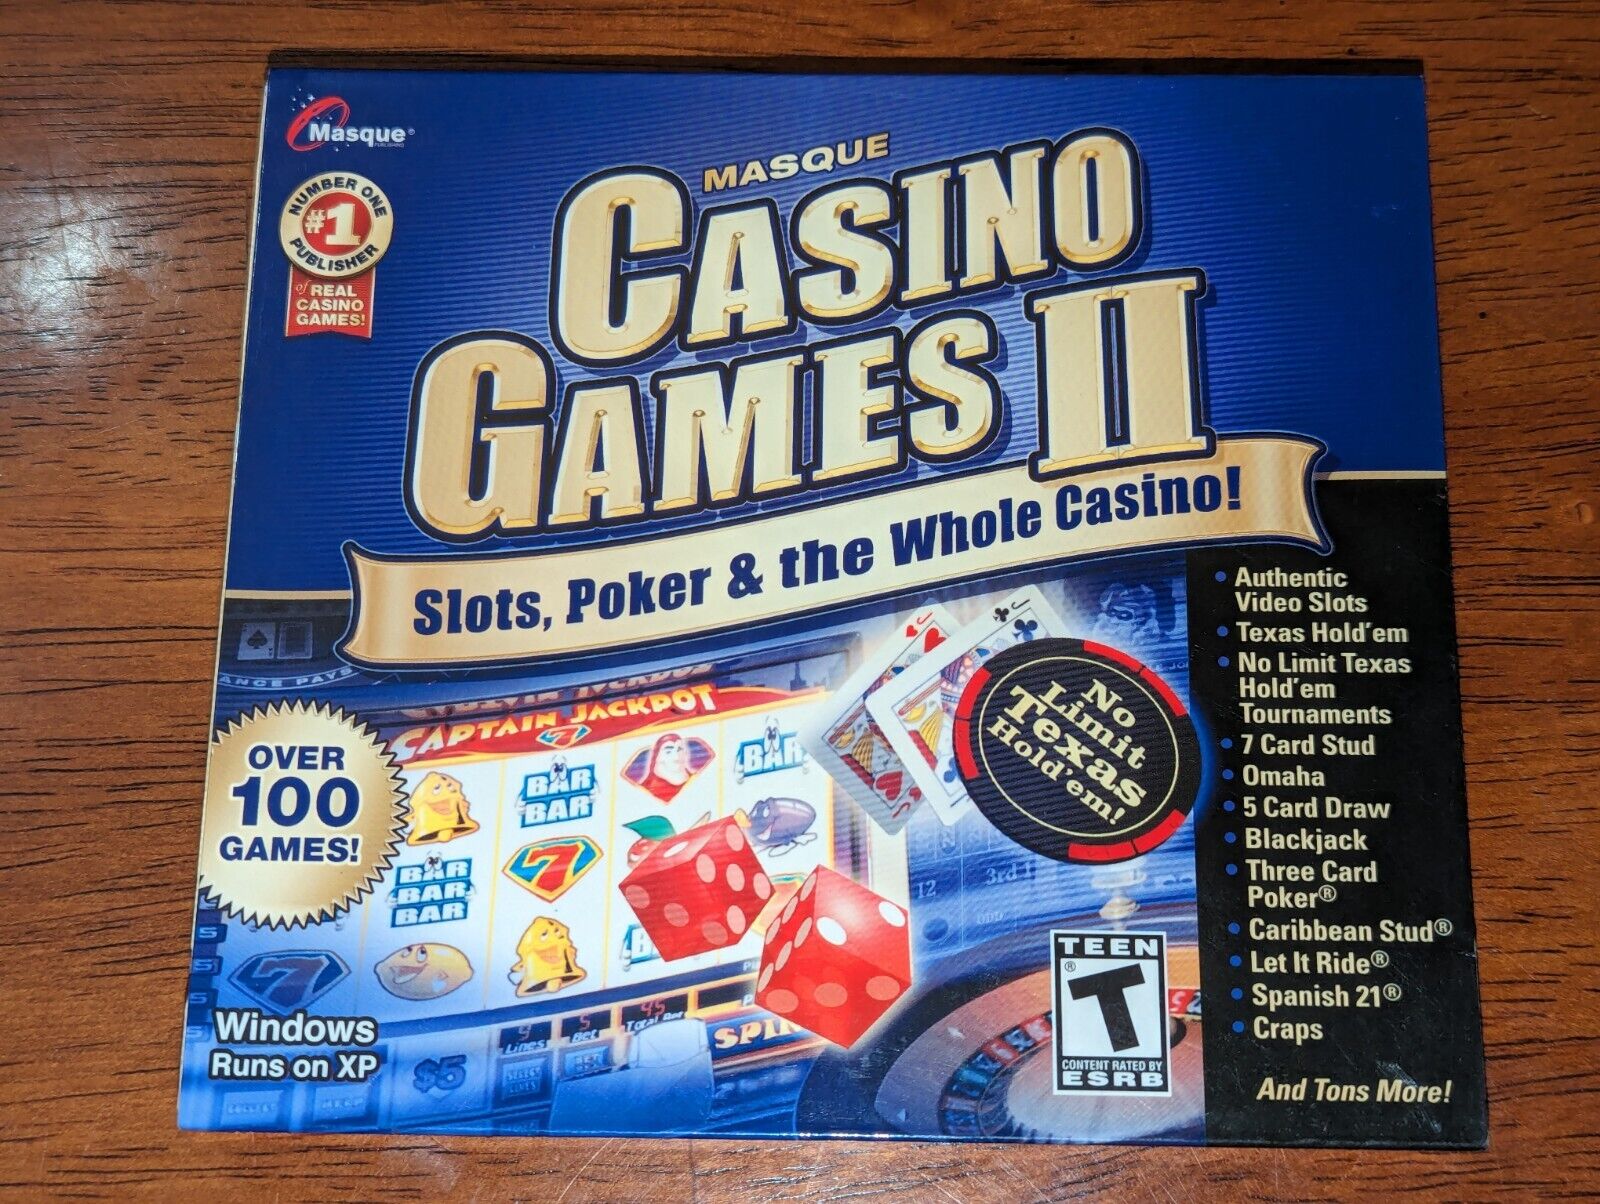 Casino Games II Slots Poker Whole Casino Masque PC CD-ROM Software C-2006